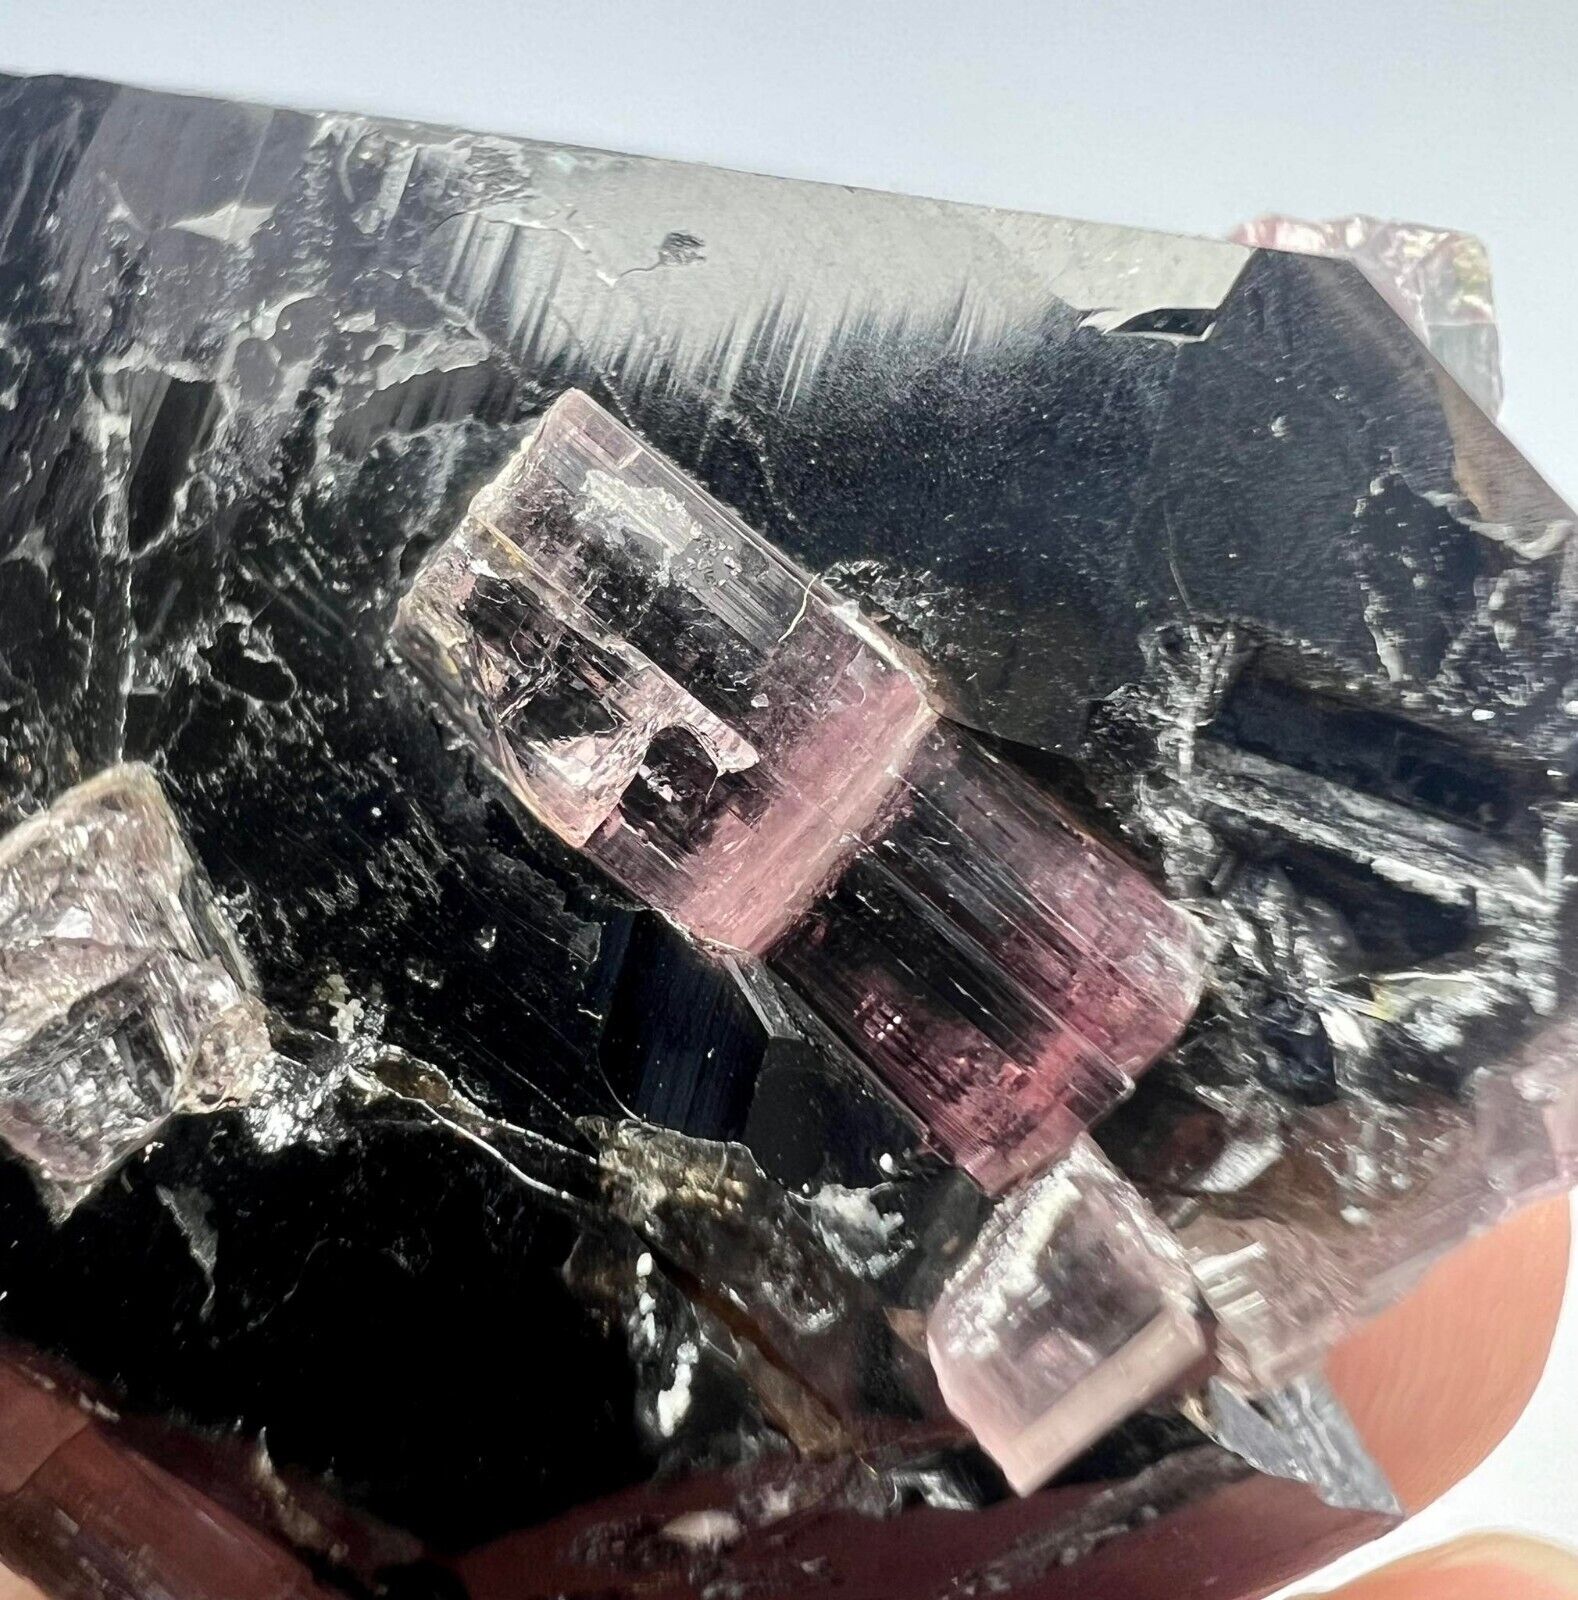 F/Well Terminated Transparent Pink Tourmaline Crystals On Quartz @AFG. 157 Carat